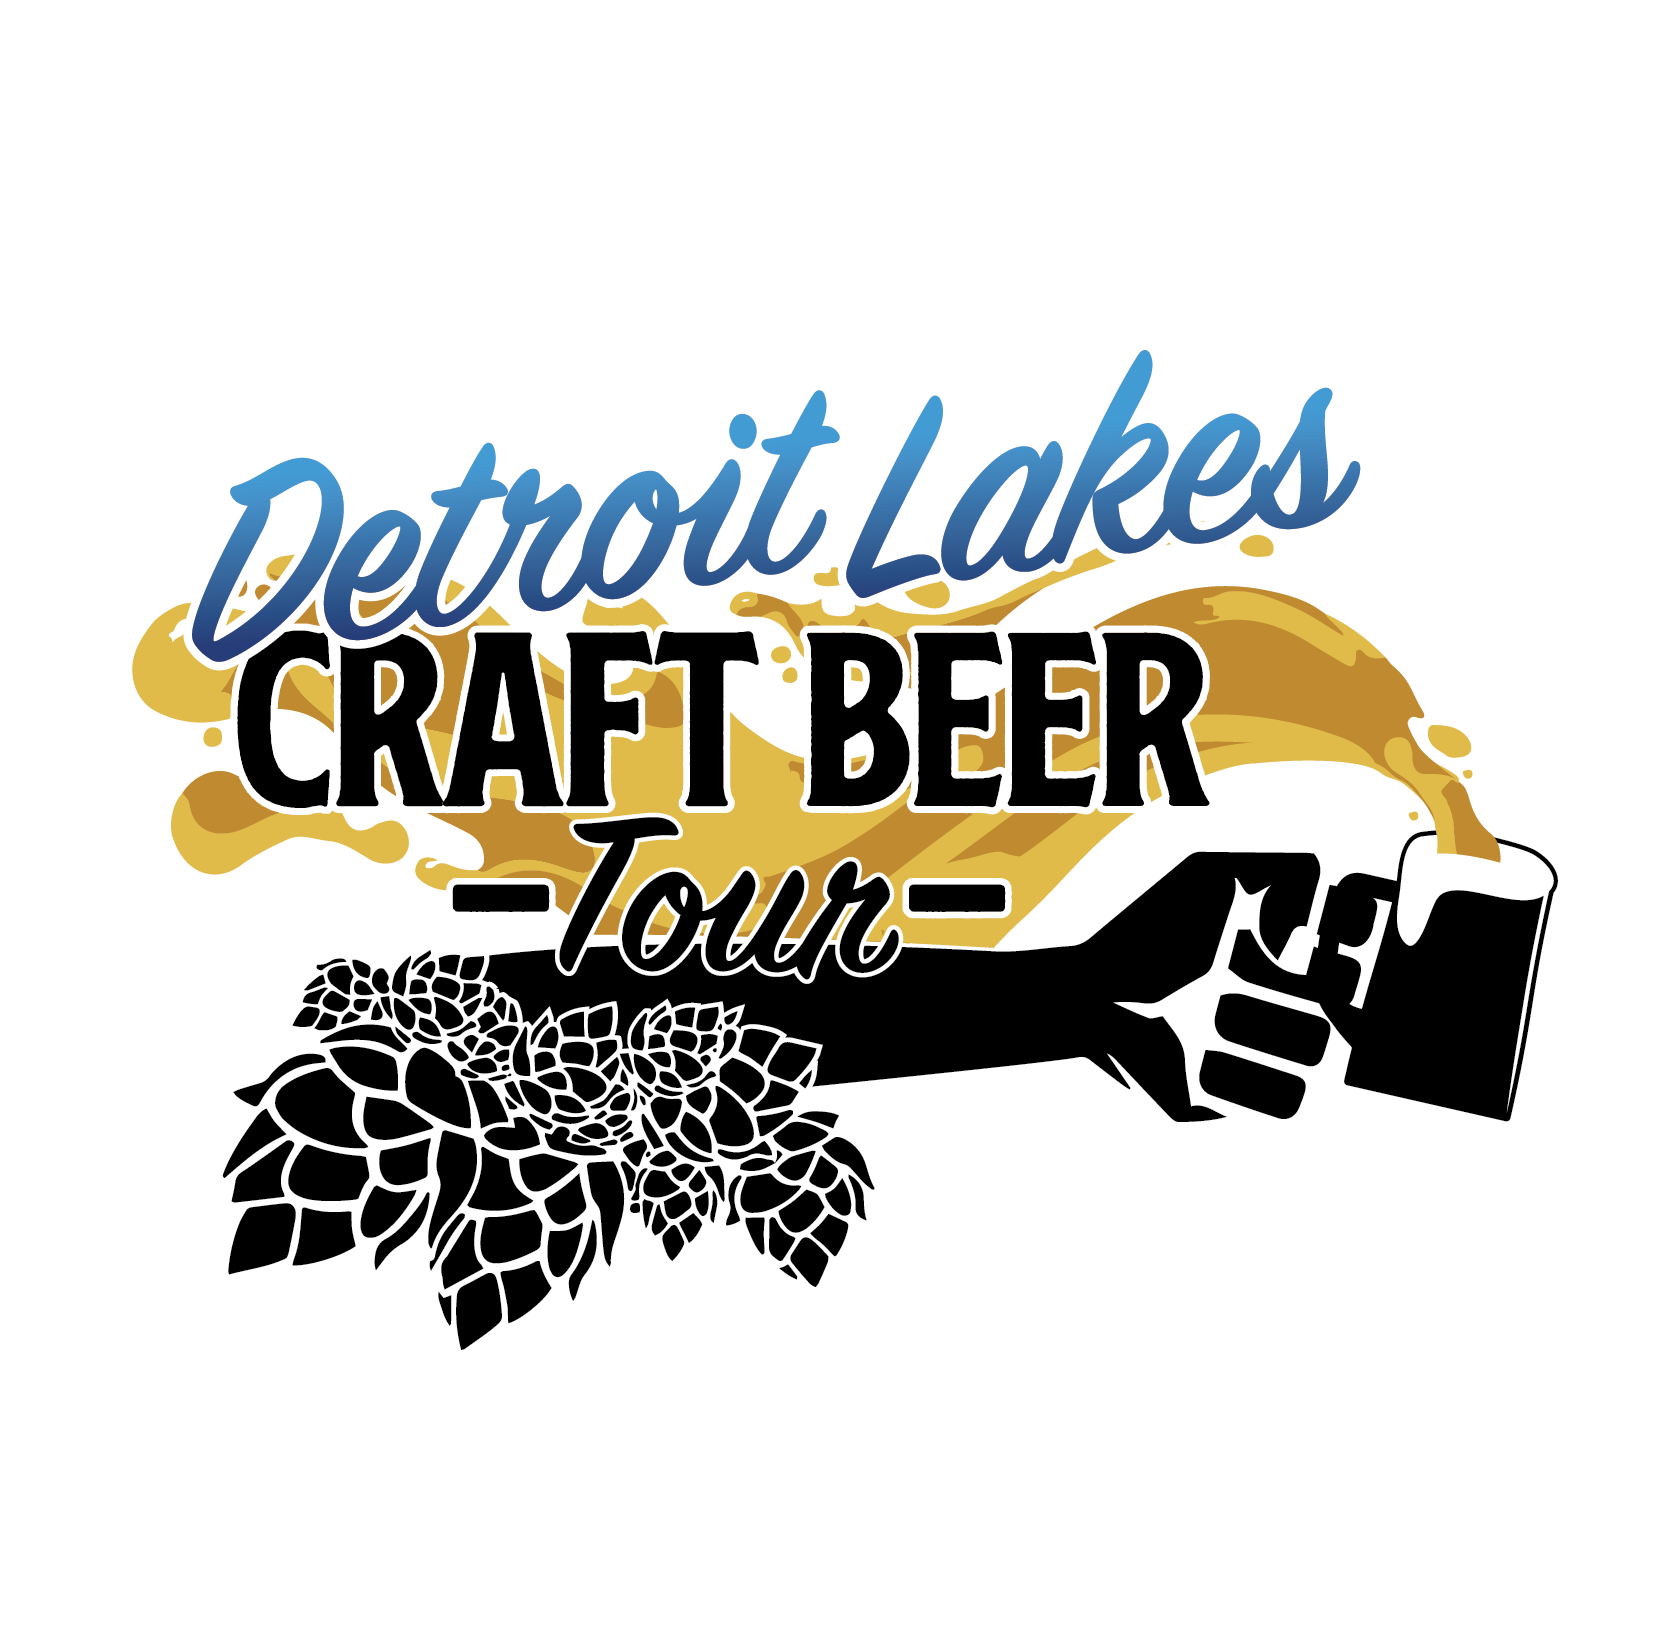 Detroit Lakes Craft Beer Tour